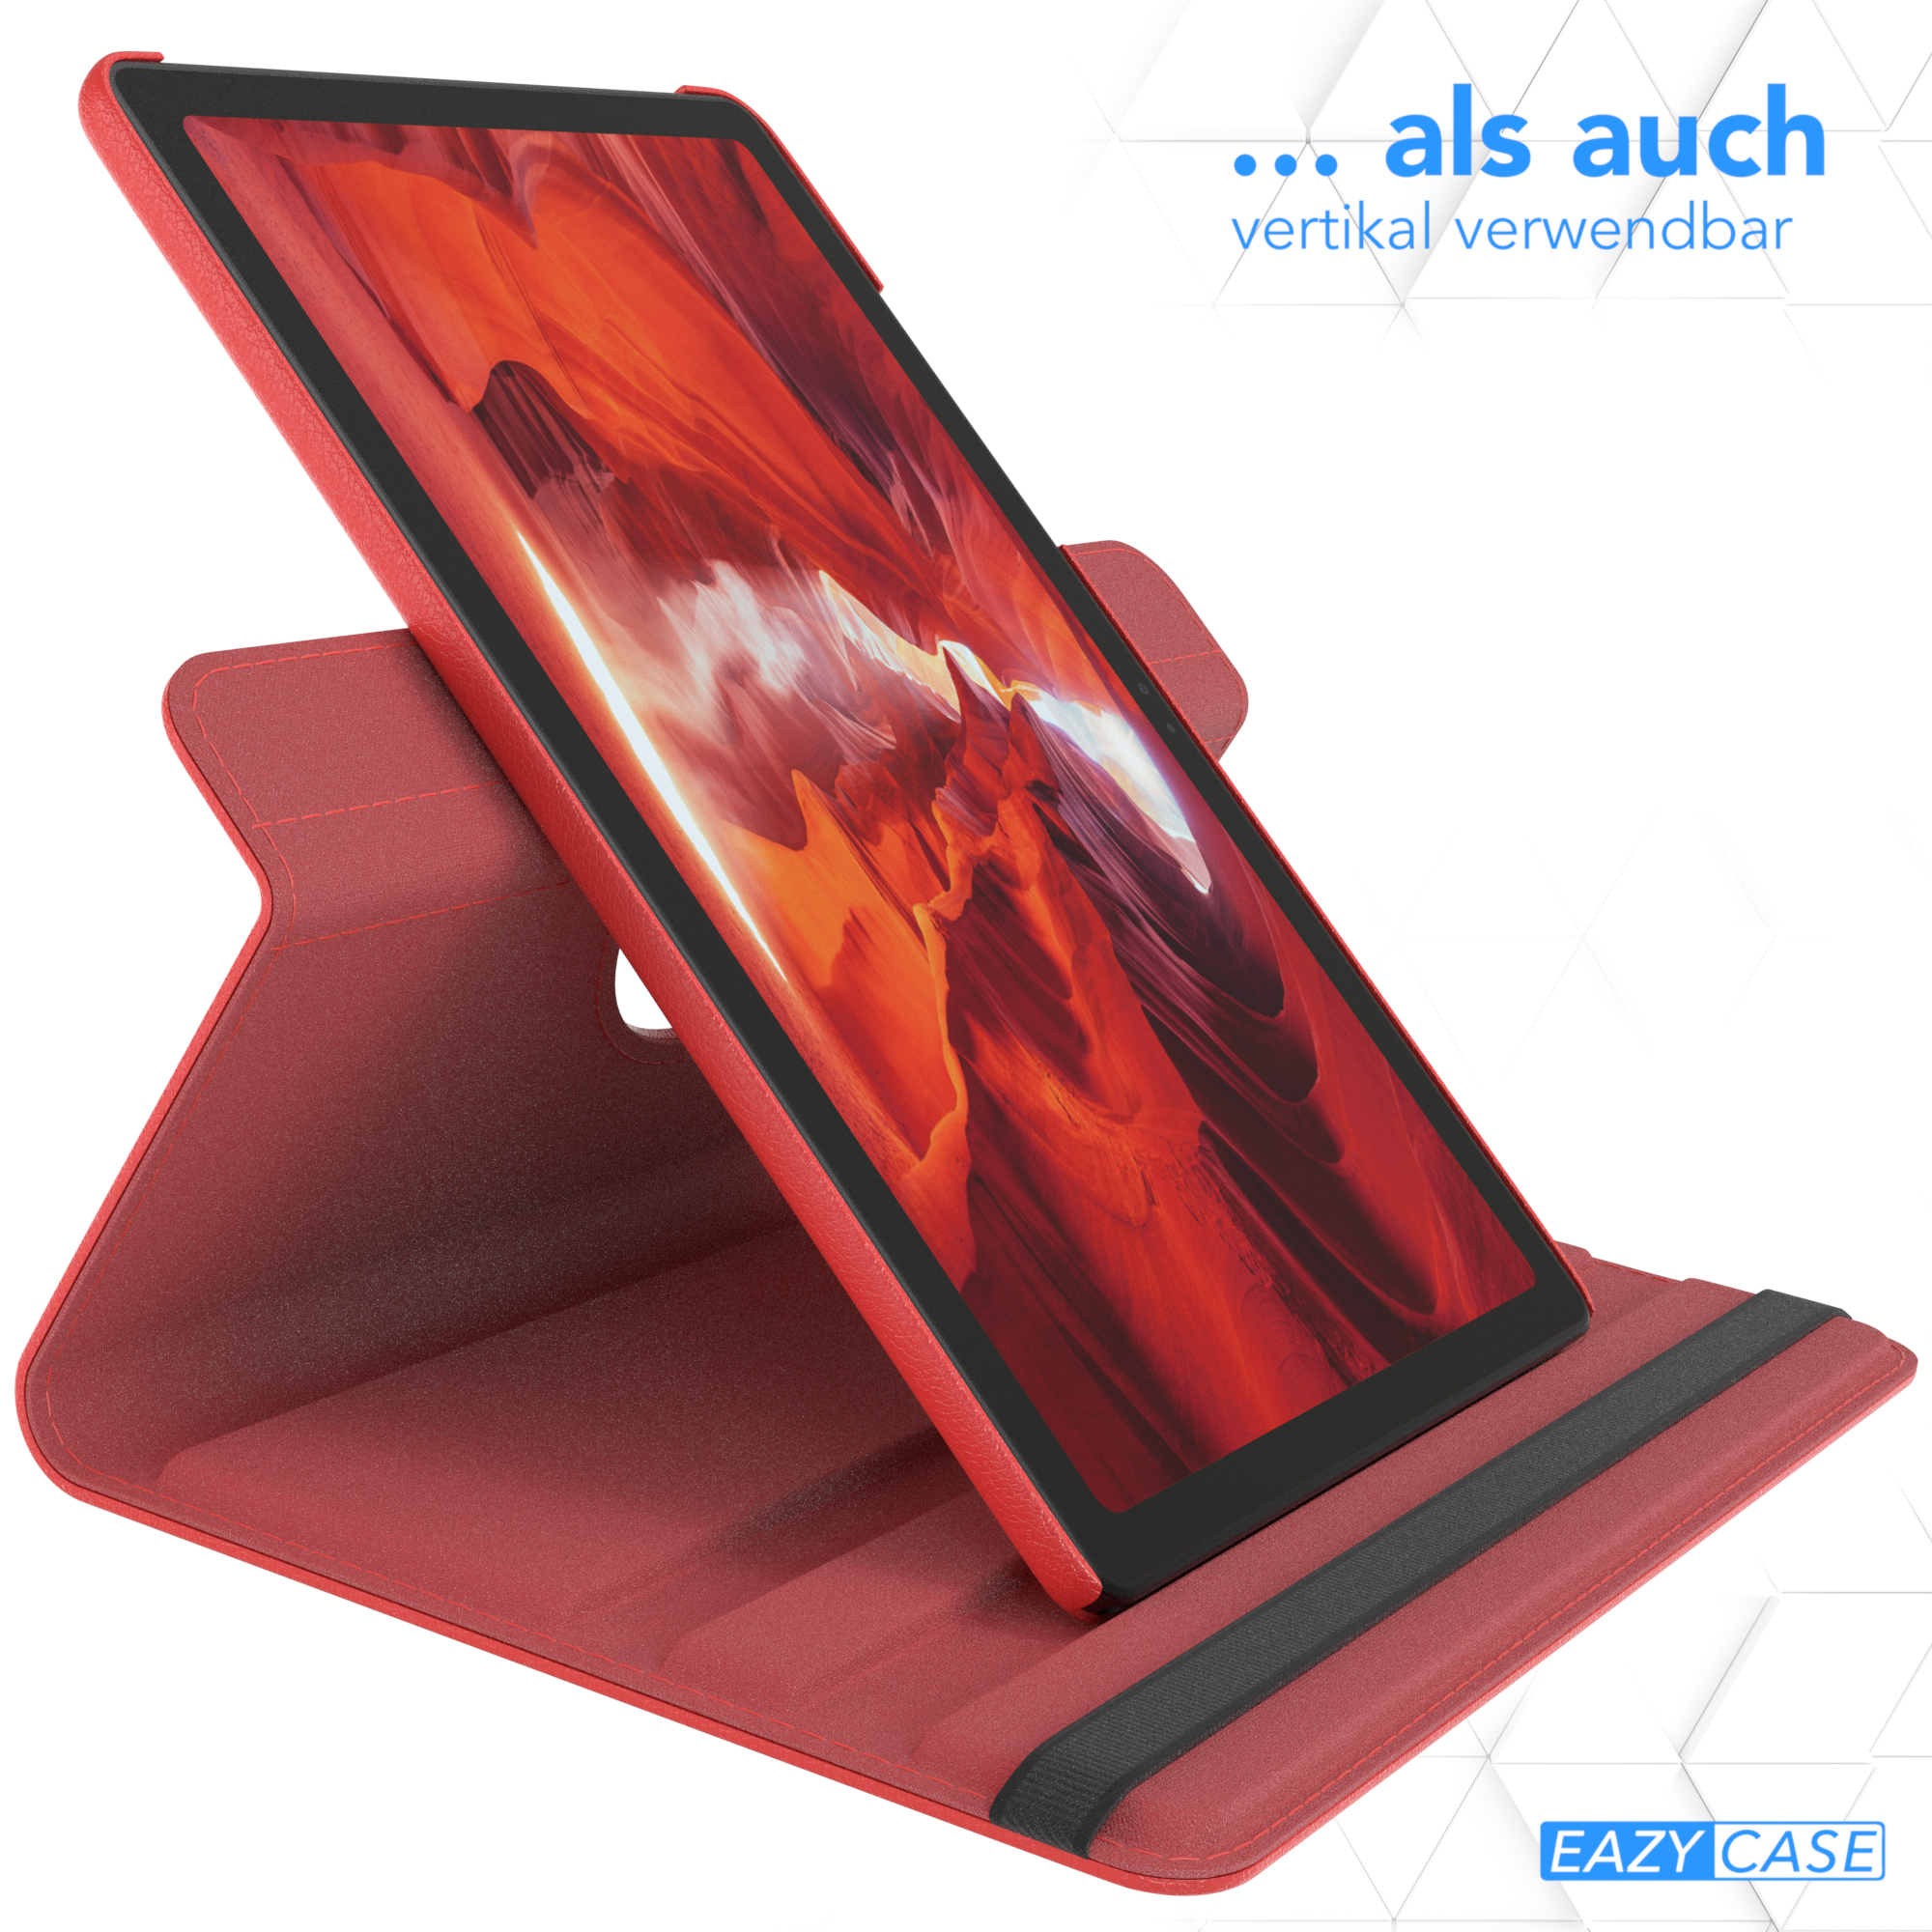 EAZY CASE Schutzhülle Rotationcase Galaxy Bookcover A7 für Samsung Kunstleder, Rot Tab Tablethülle 10.4